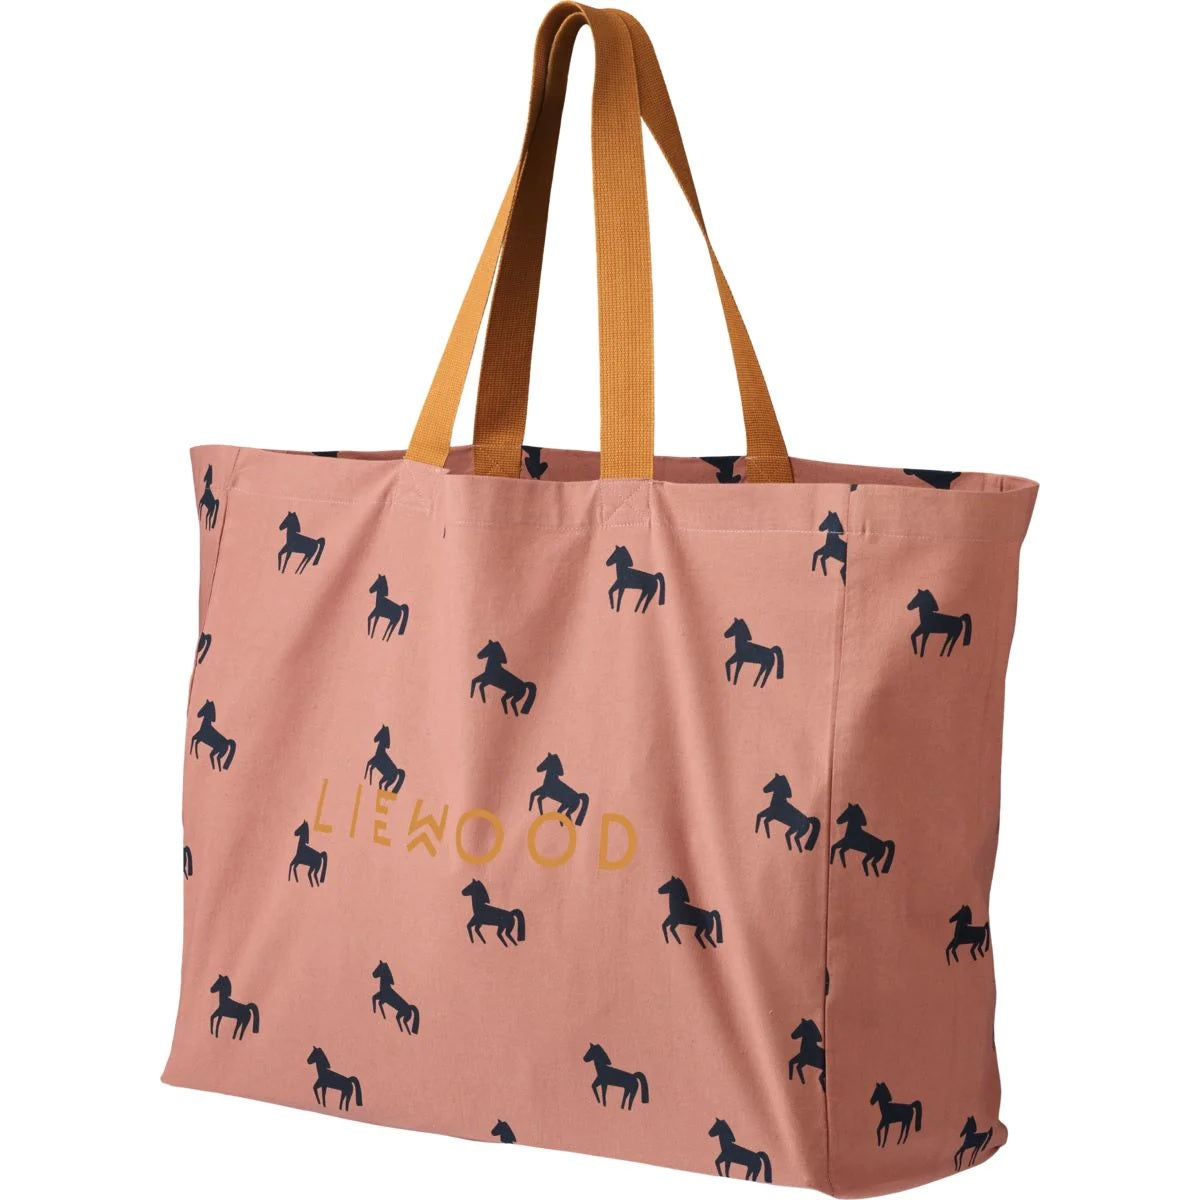 Liewood Tote Bag - Horses/Dark rosetta